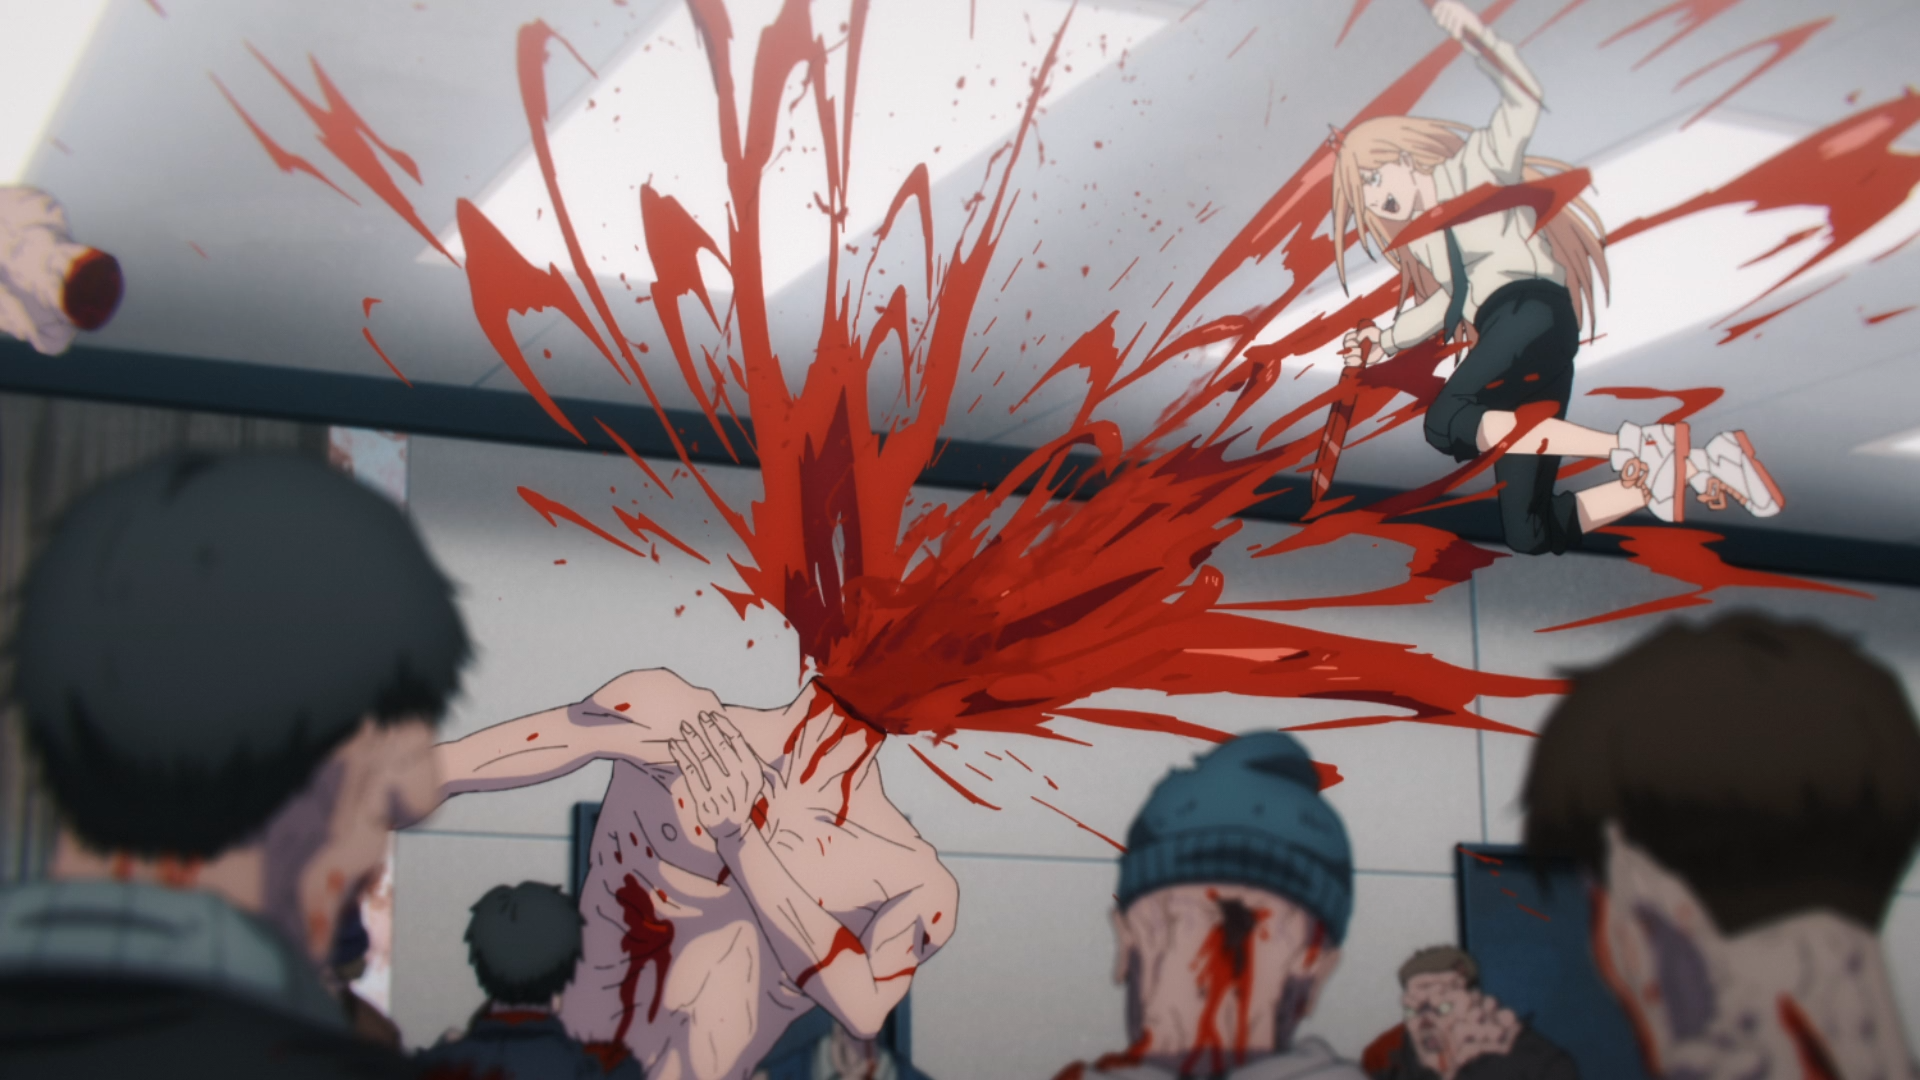 Anime Corner - BREAKING: Chainsaw Man - Episode 12